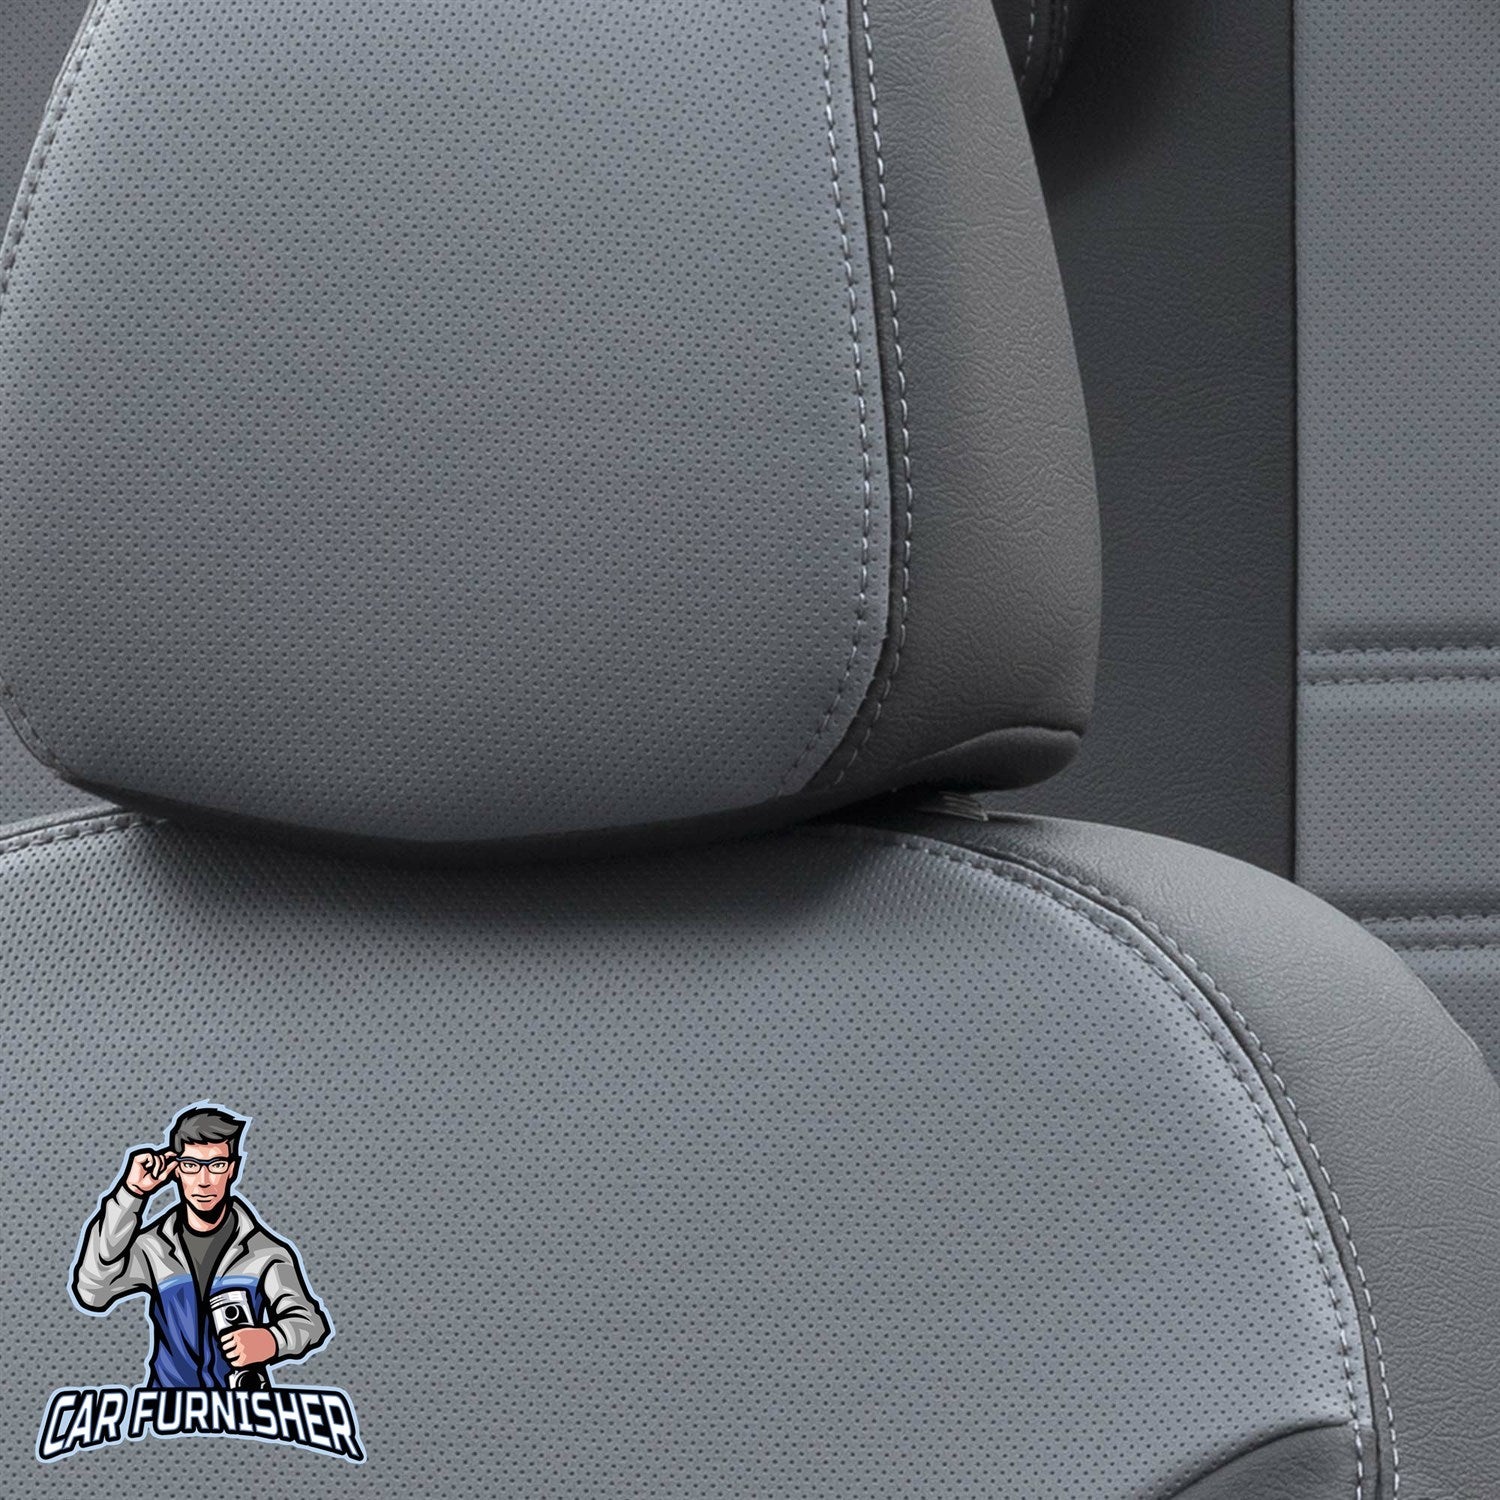 Mini Cooper Car Seat Covers 2002-2023 Istanbul Design Smoked Black Full Set (5 Seats + Handrest) Leather & Fabric